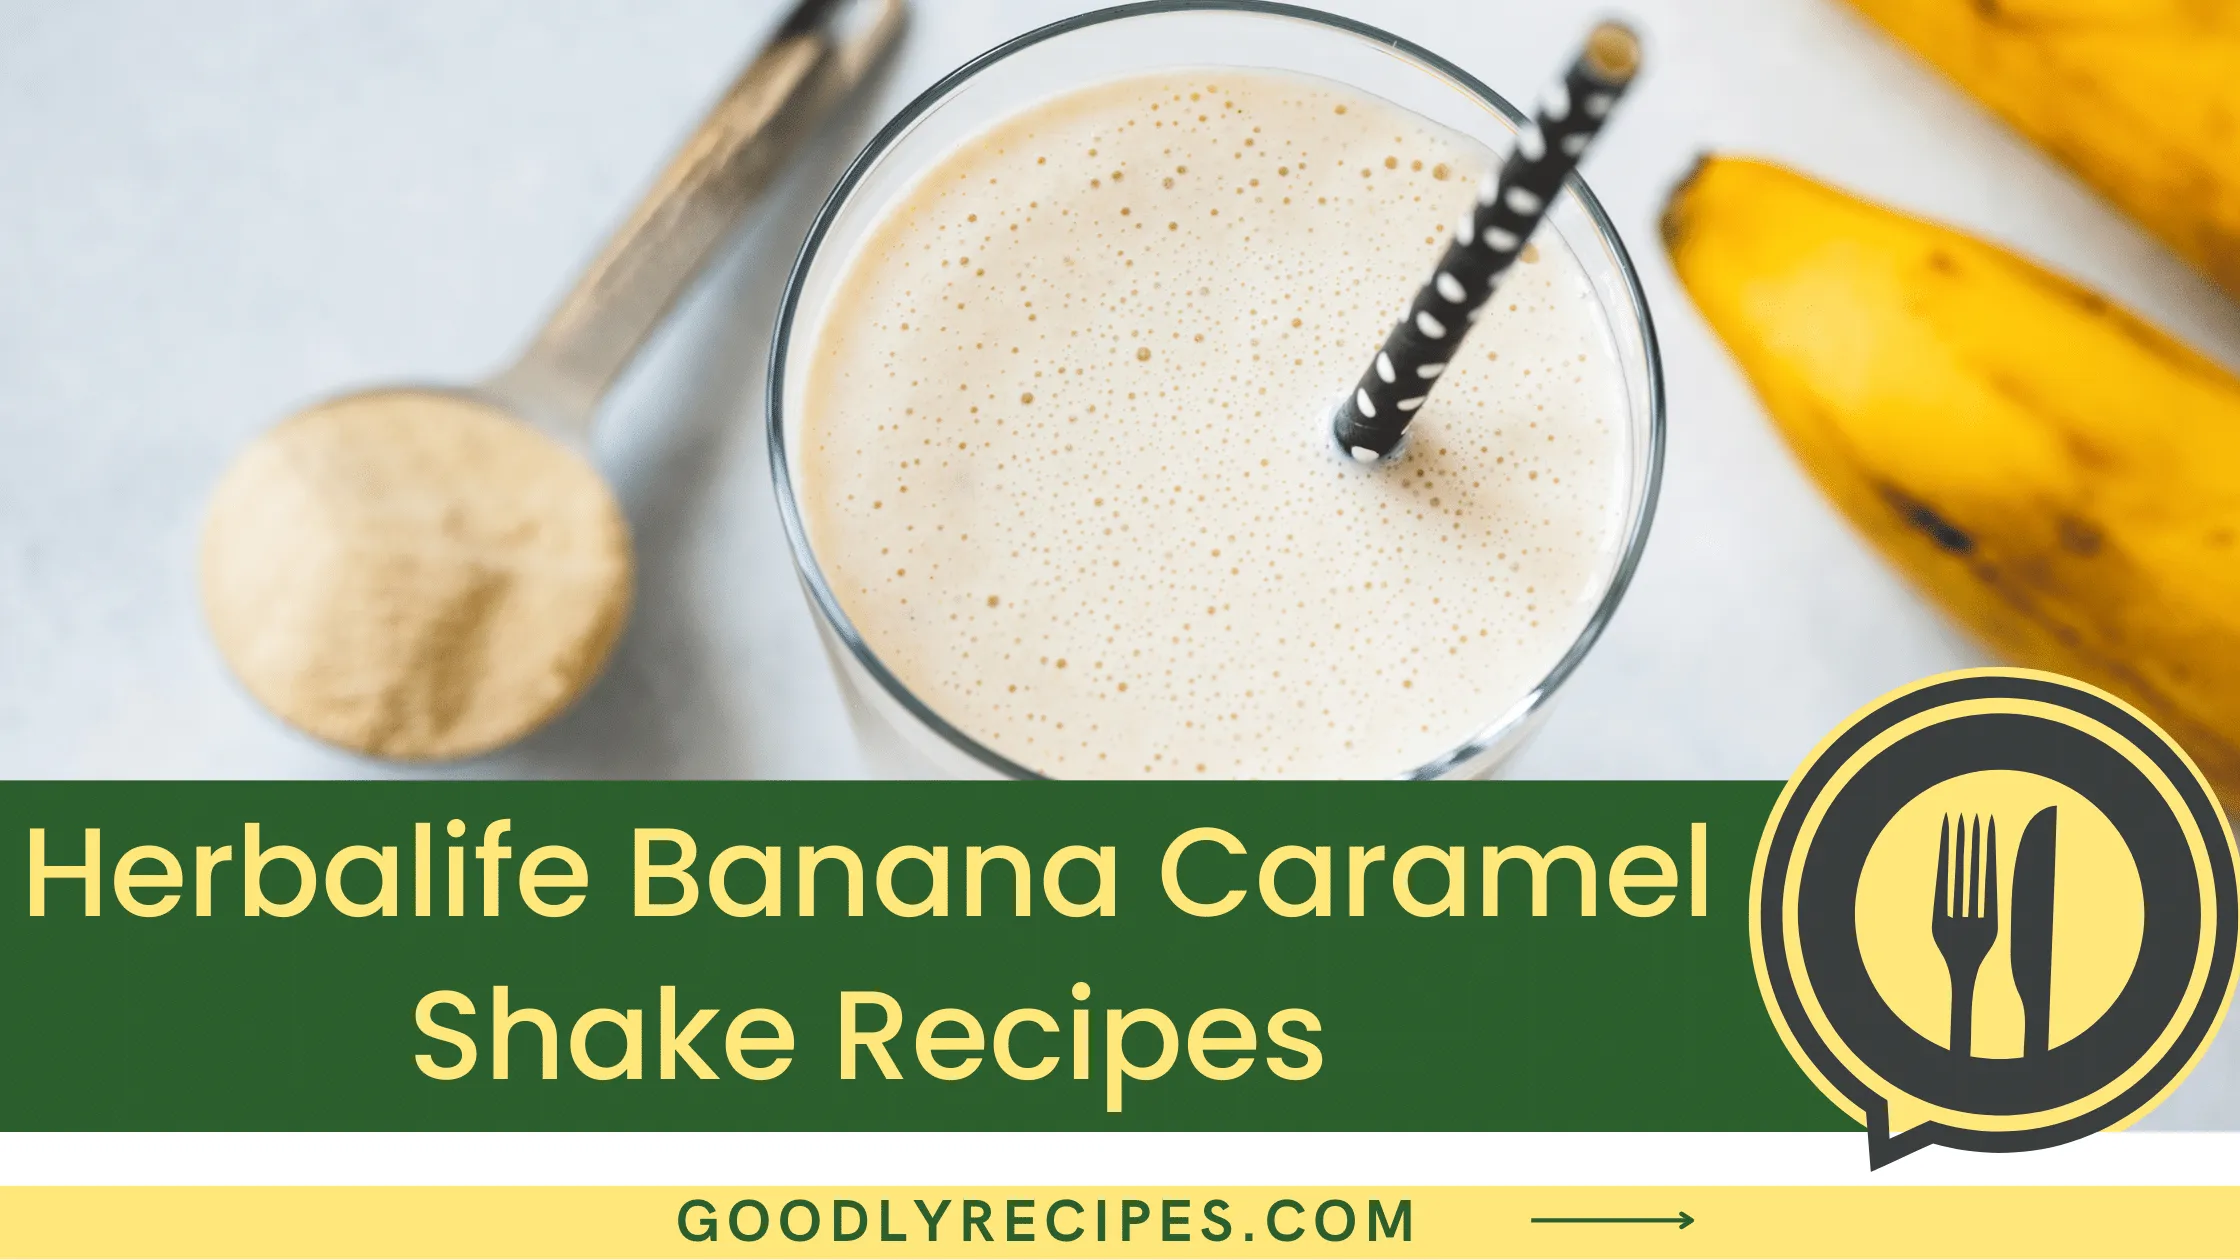 Herbalife Banana Caramel Shake Recipe - For Food Lovers